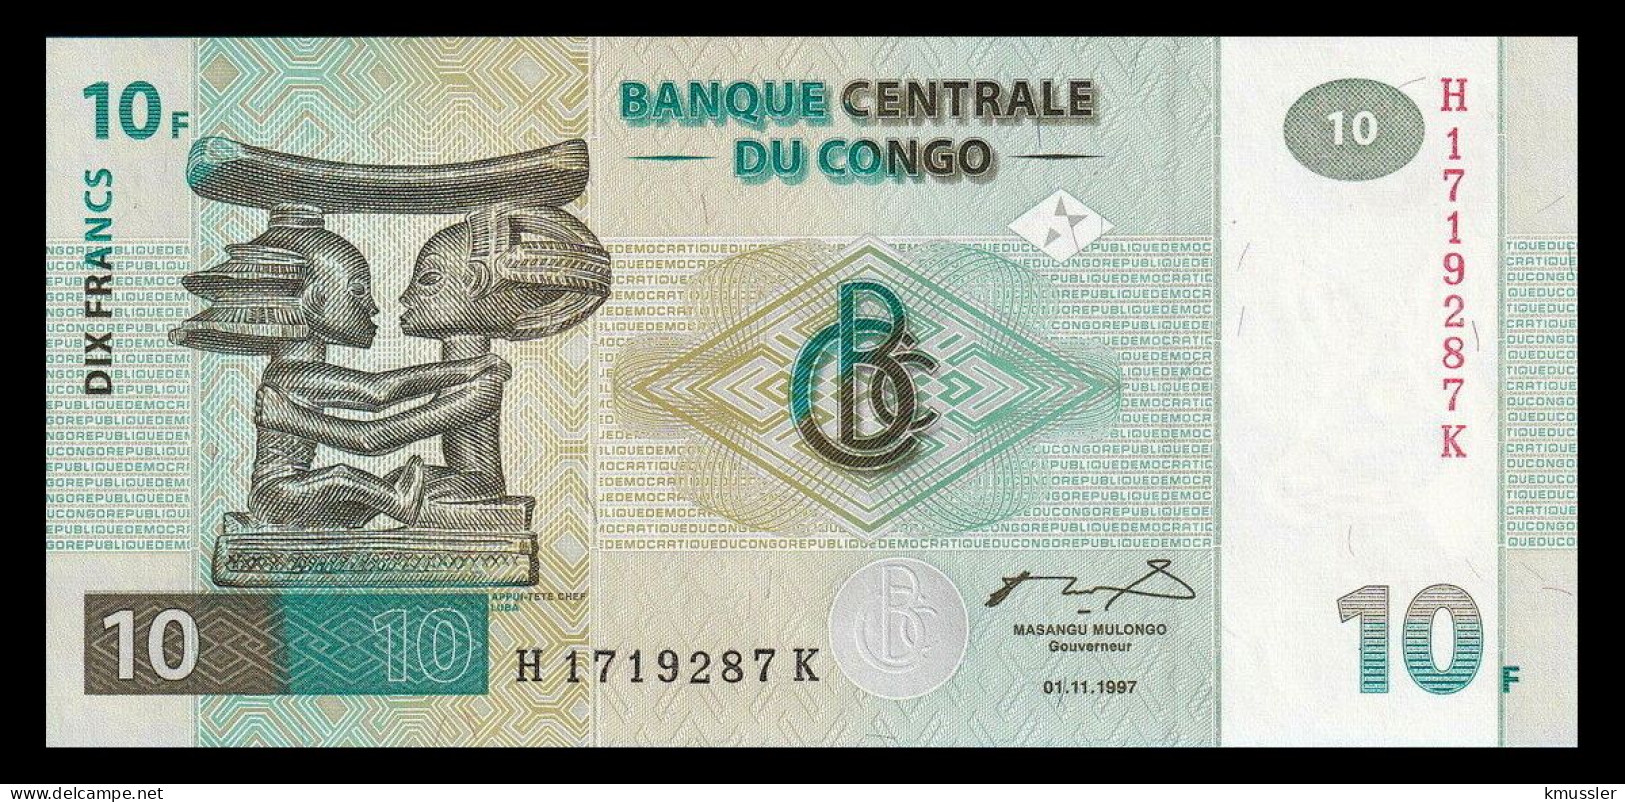 # # # Banknote Kongo (Congo) 10 Francs 1997 (P-87B) 1997 HdM UNC # # # - Demokratische Republik Kongo & Zaire